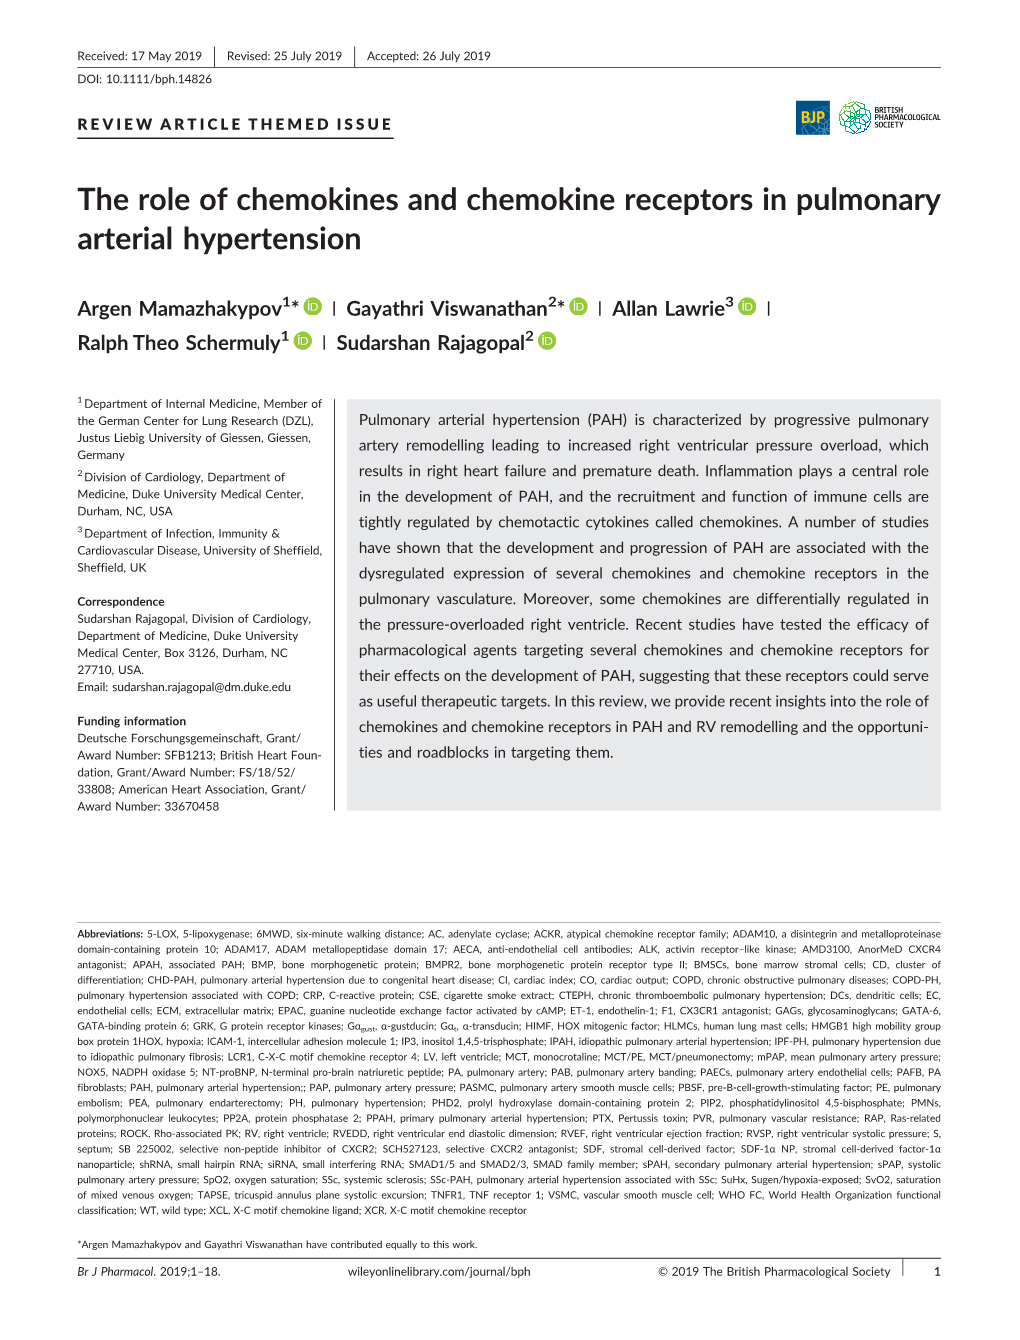 The Role of Chemokines and Chemokine Receptors in Pulmonary Arterial Hypertension